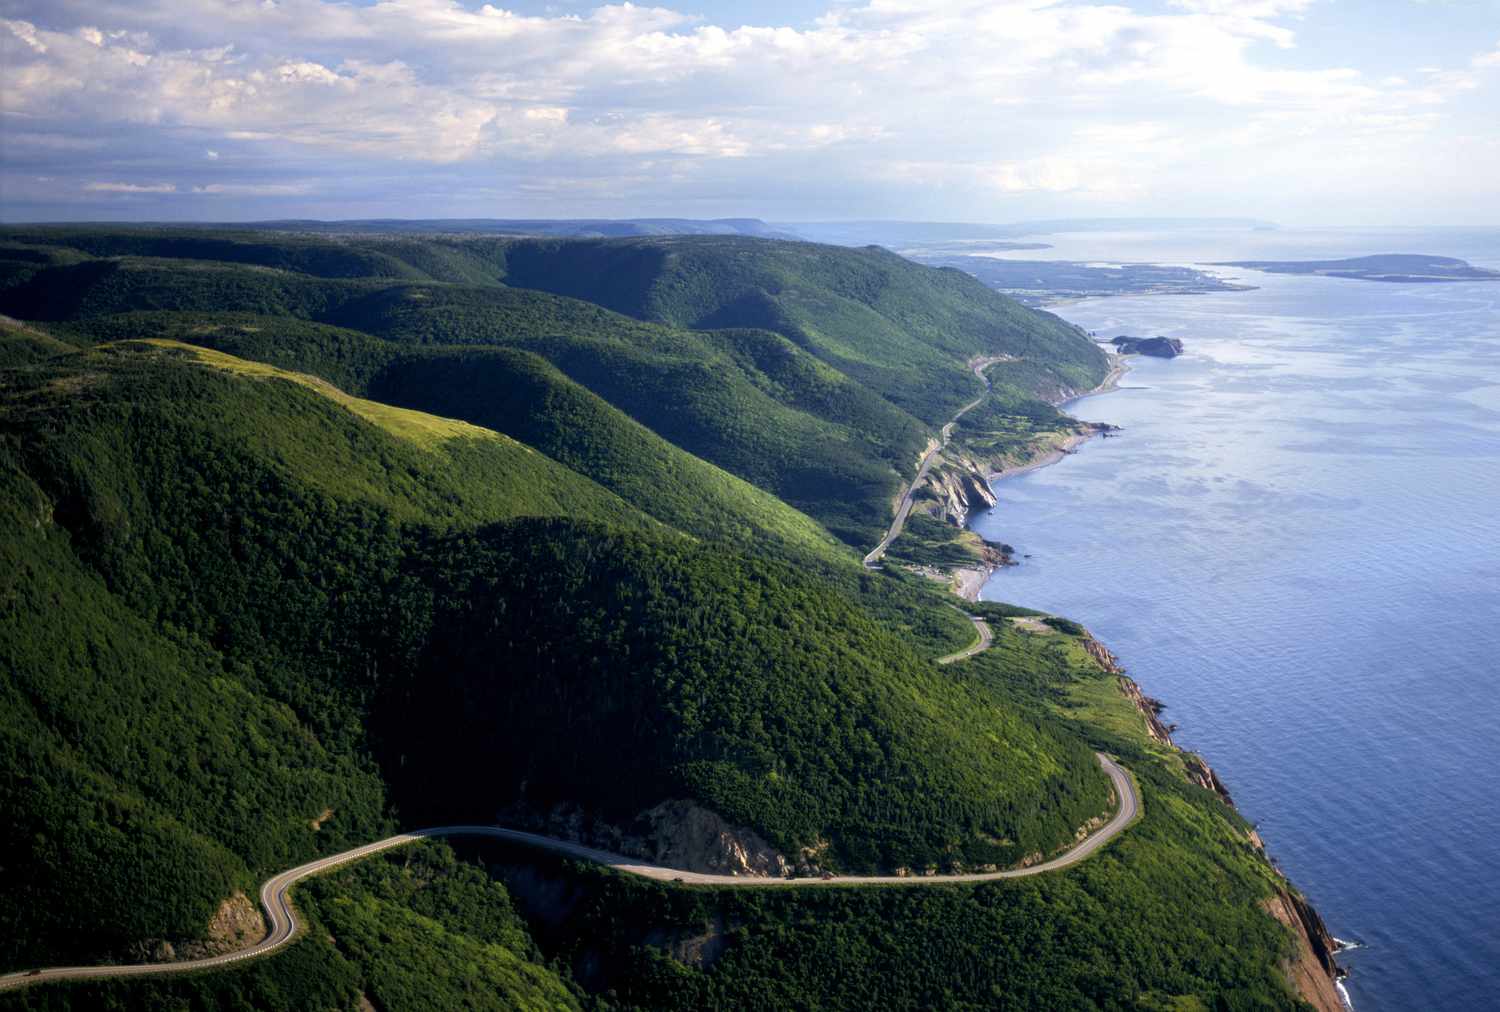 Scrub Inspired operates in North Sydney, Nova Scotia. Beautiful Cape Breton Island is our home in Canada.